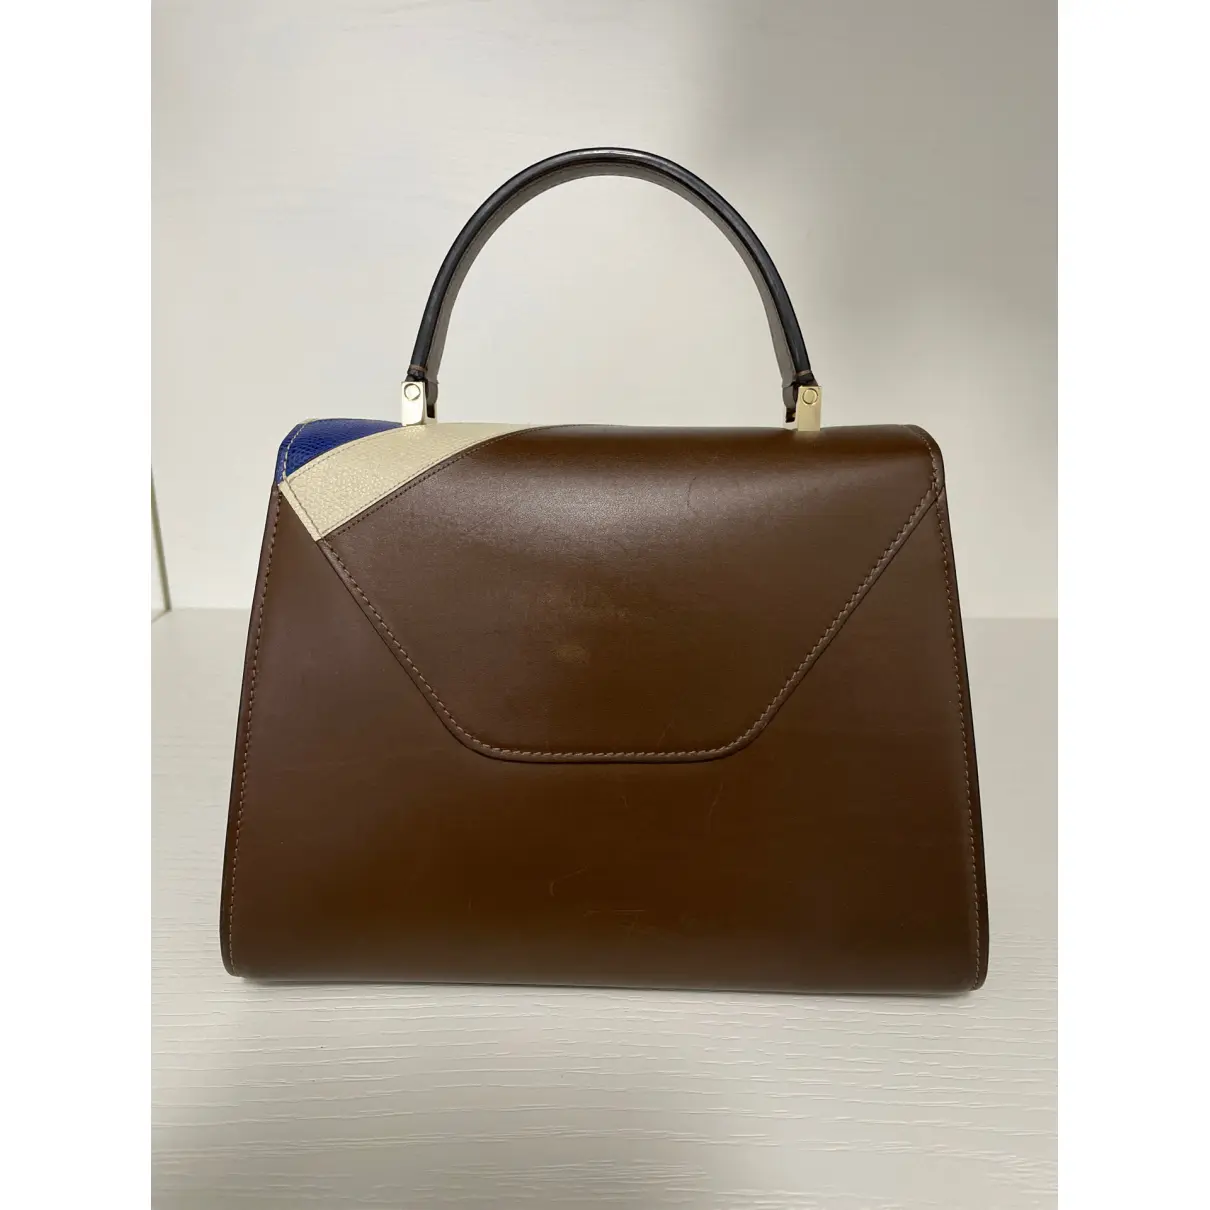 Buy Valextra Iside leather handbag online